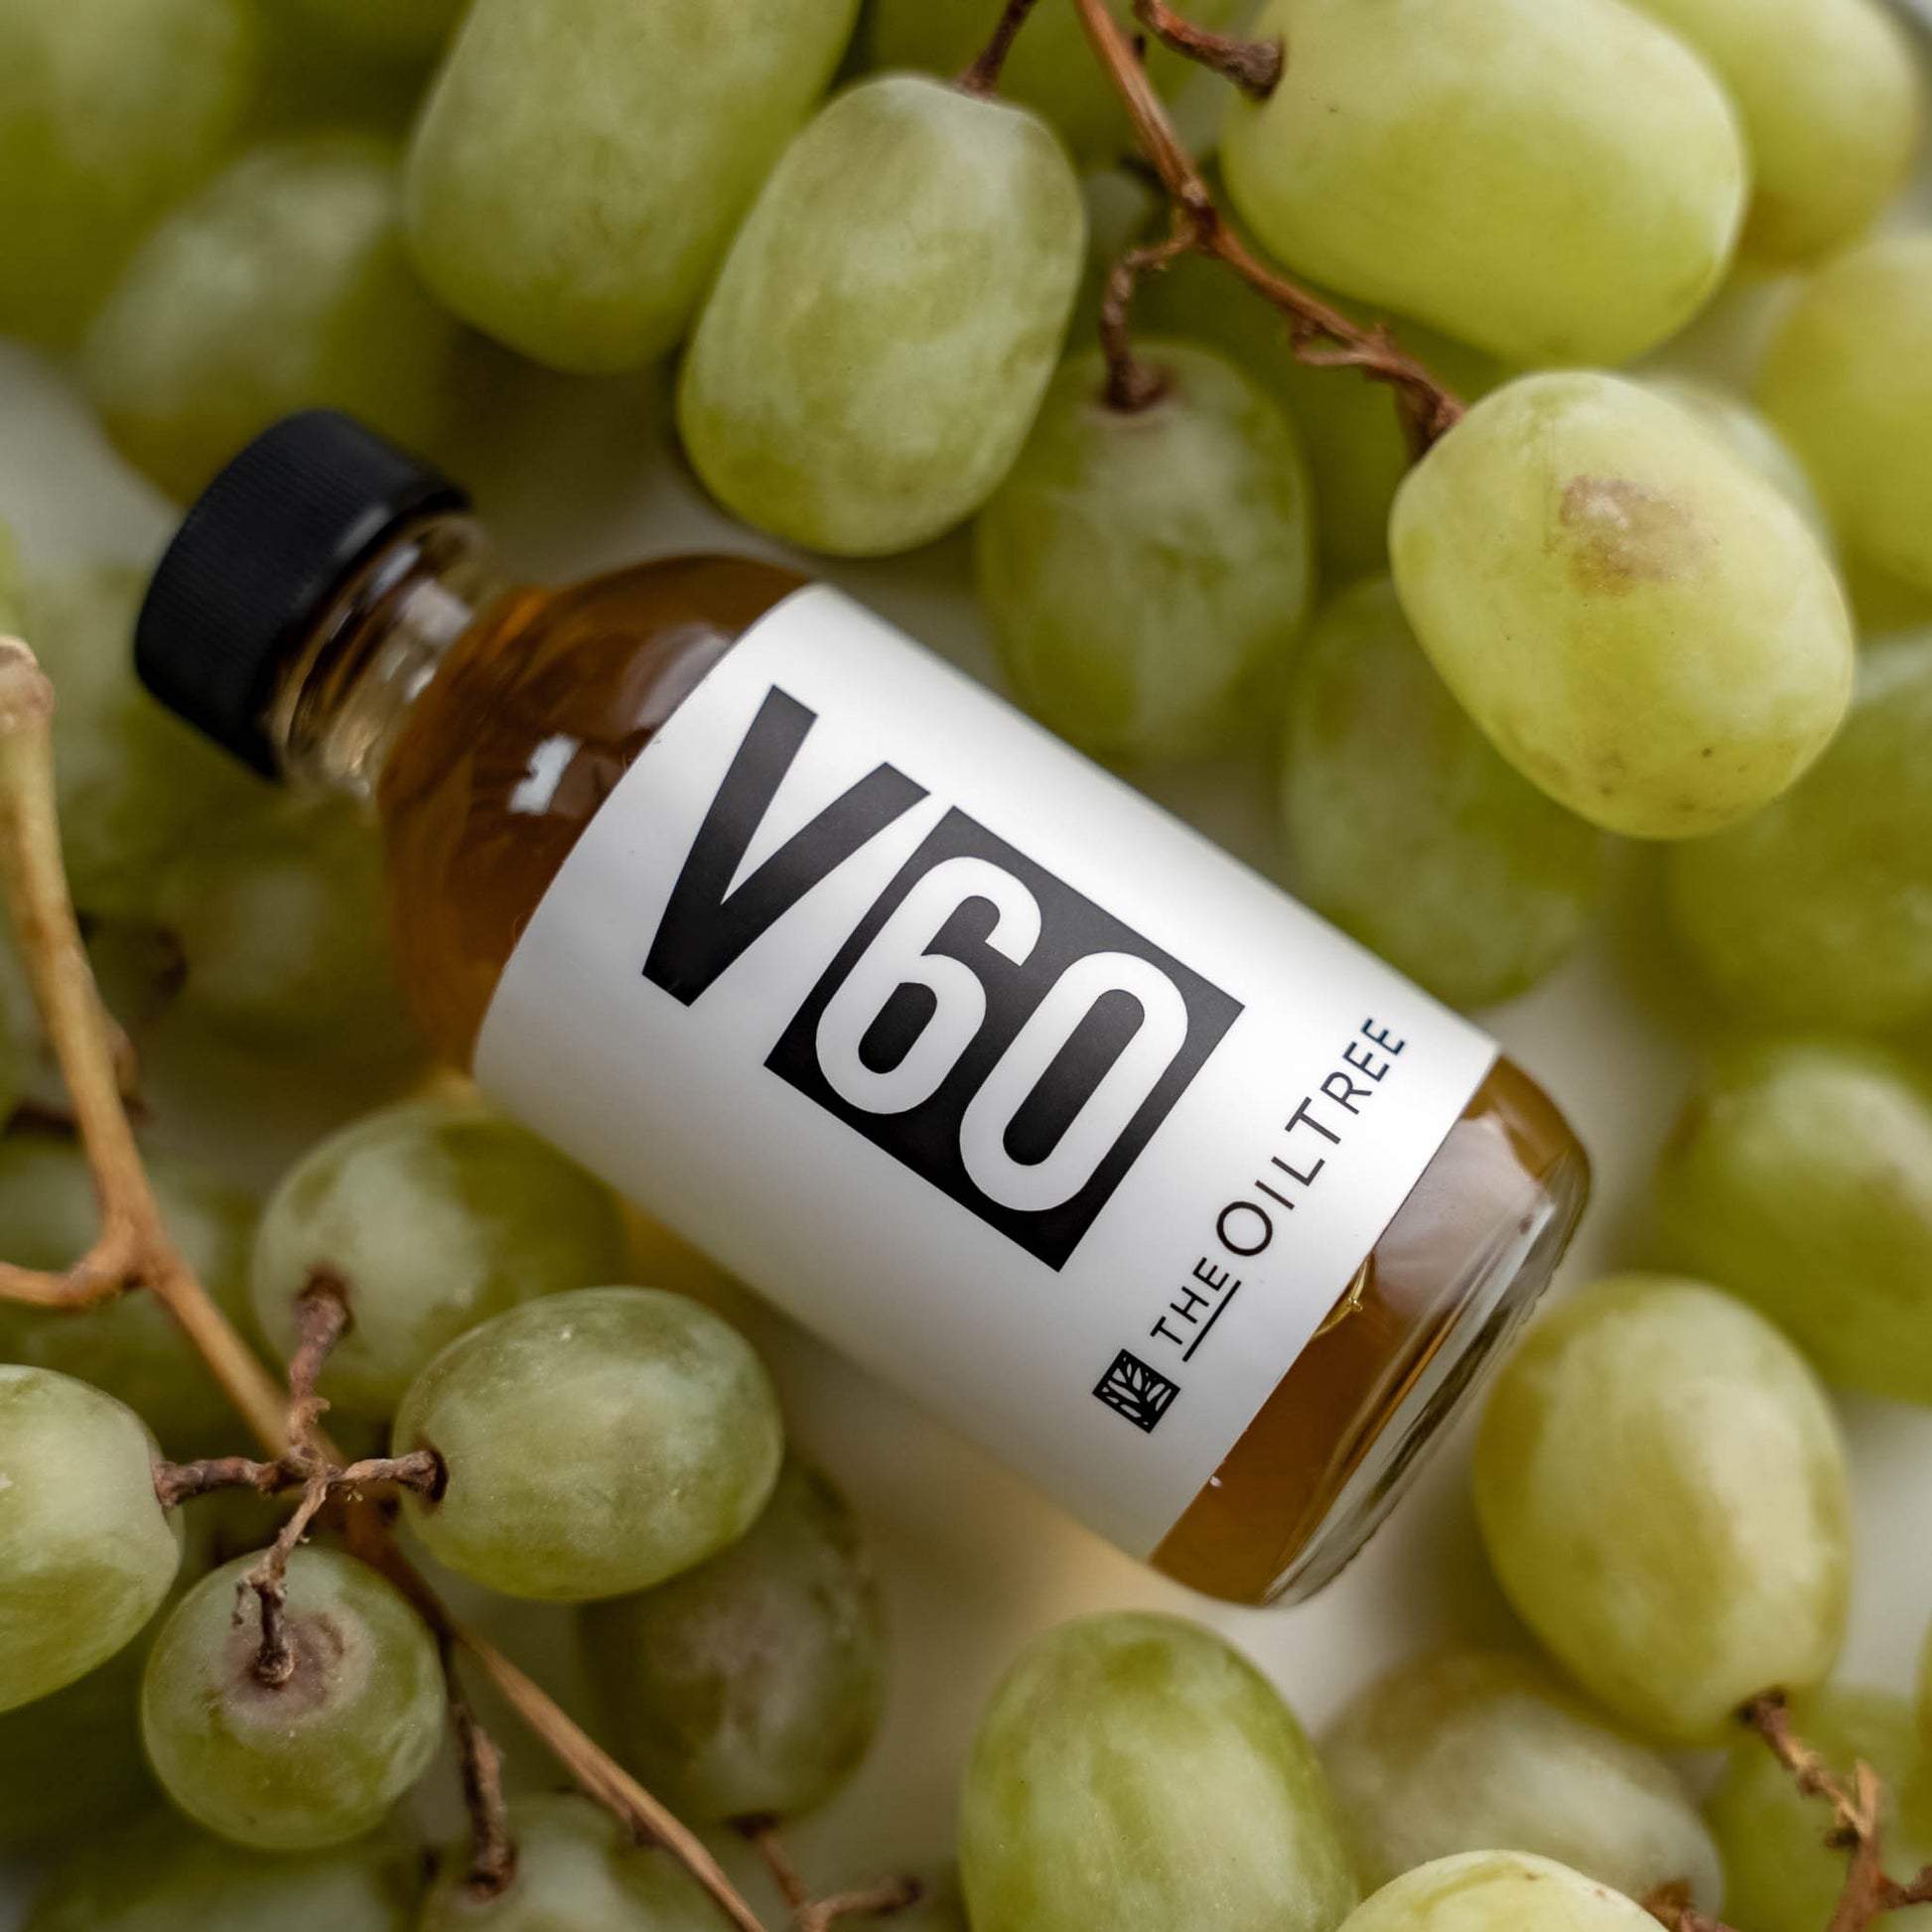 Apremium Aged White Balsamic Vinegar